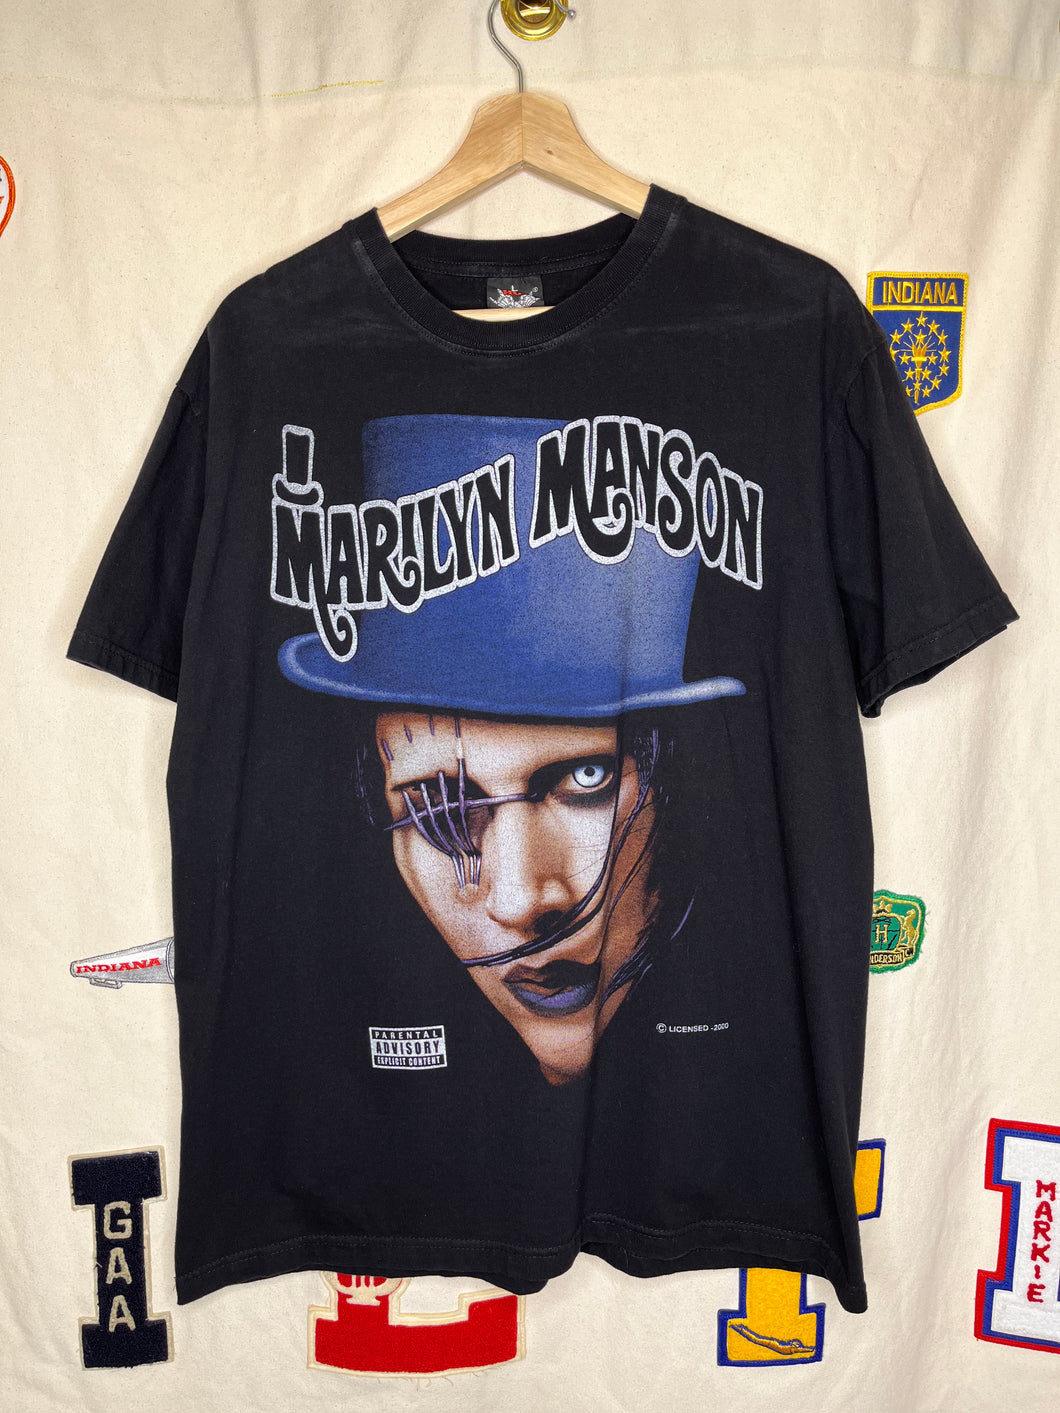 Vintage Marilyn Manson Shirt: L